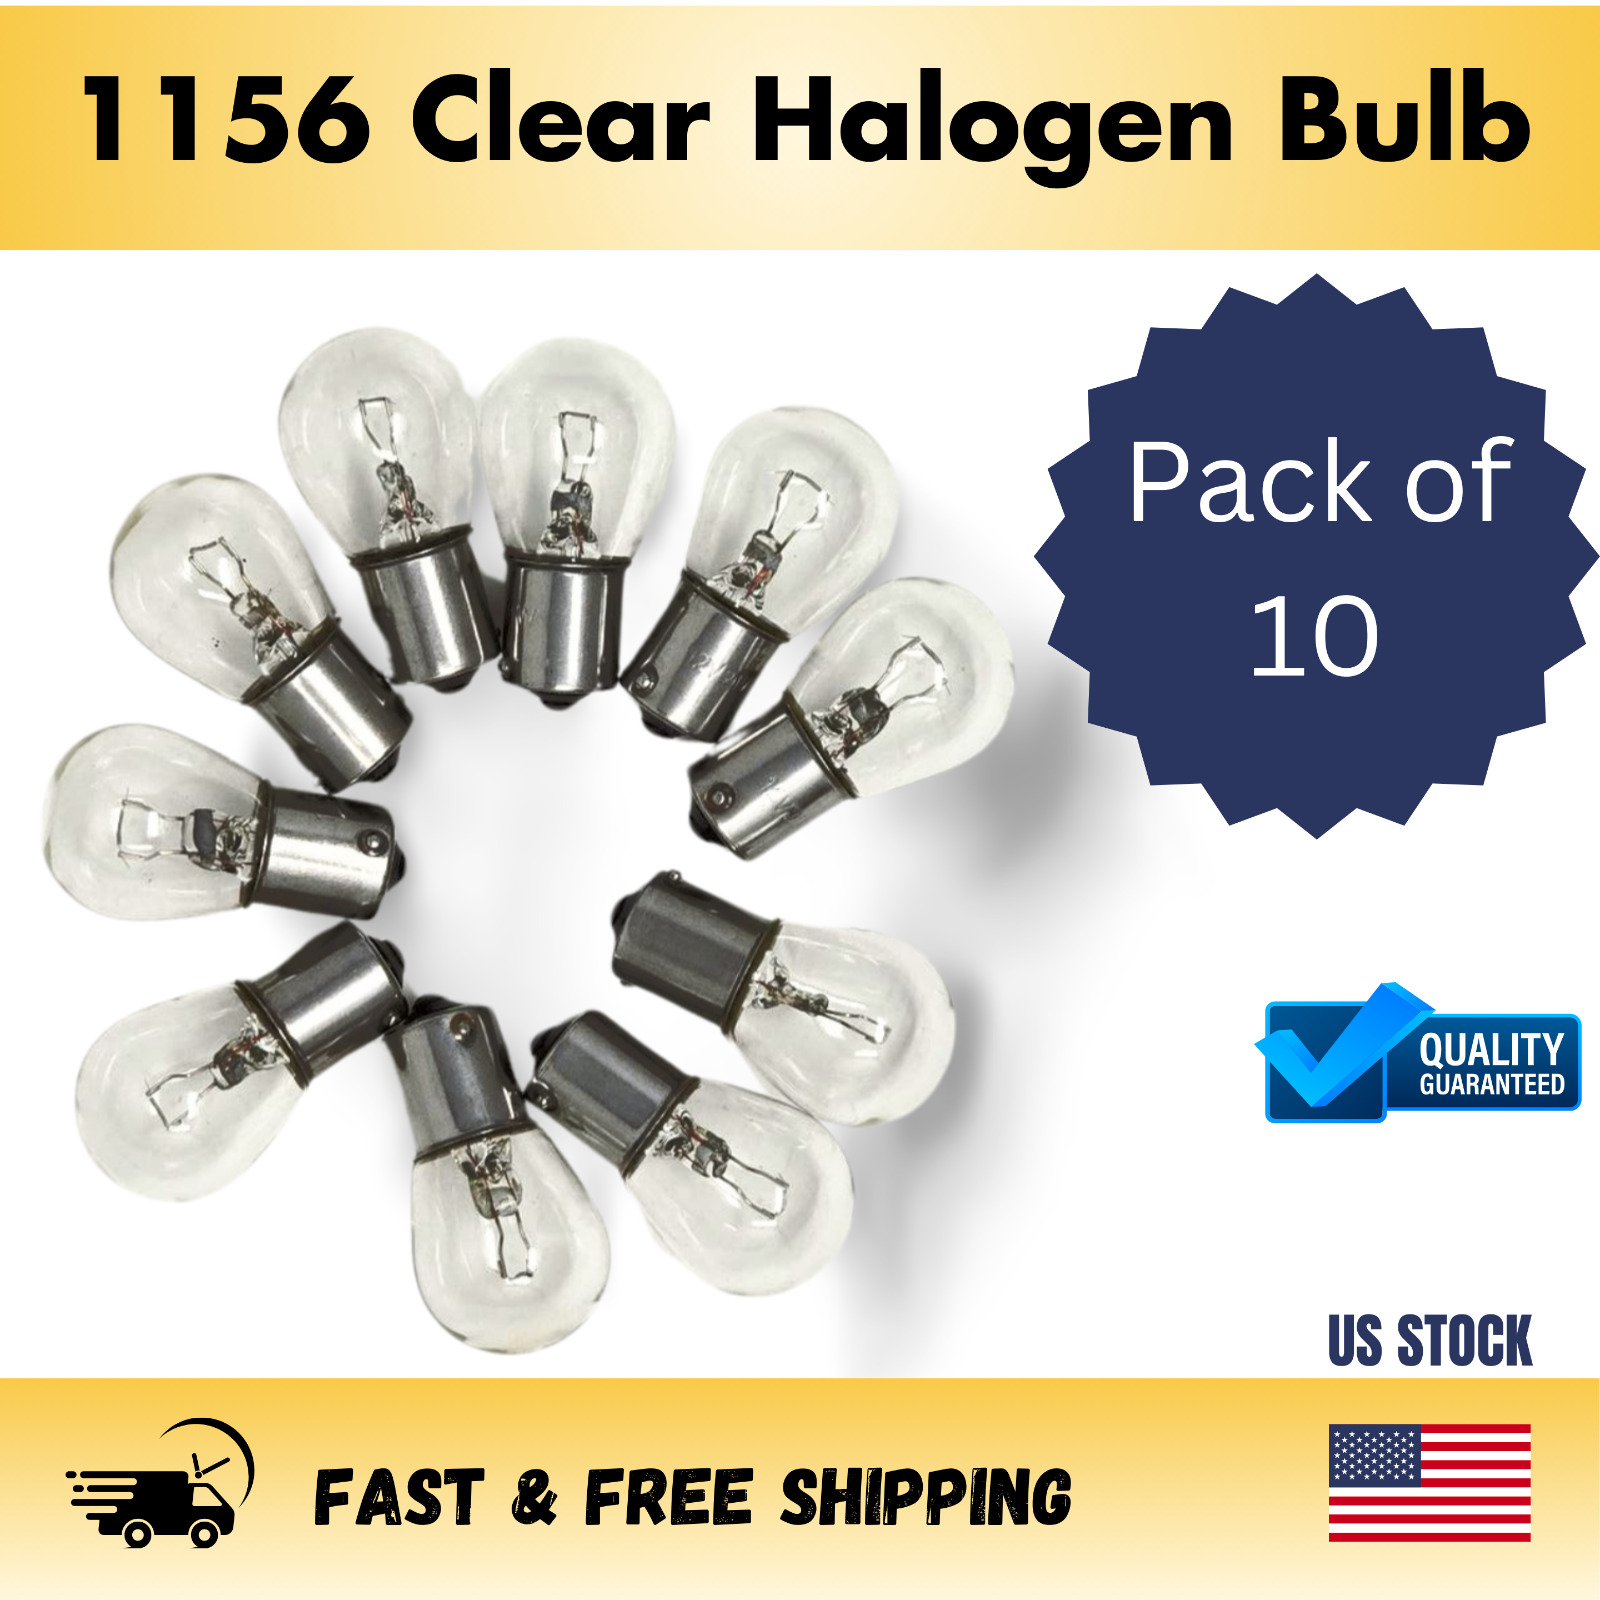 1156 Clear Halogen Miniature Bulb Pack (10 Bulbs)